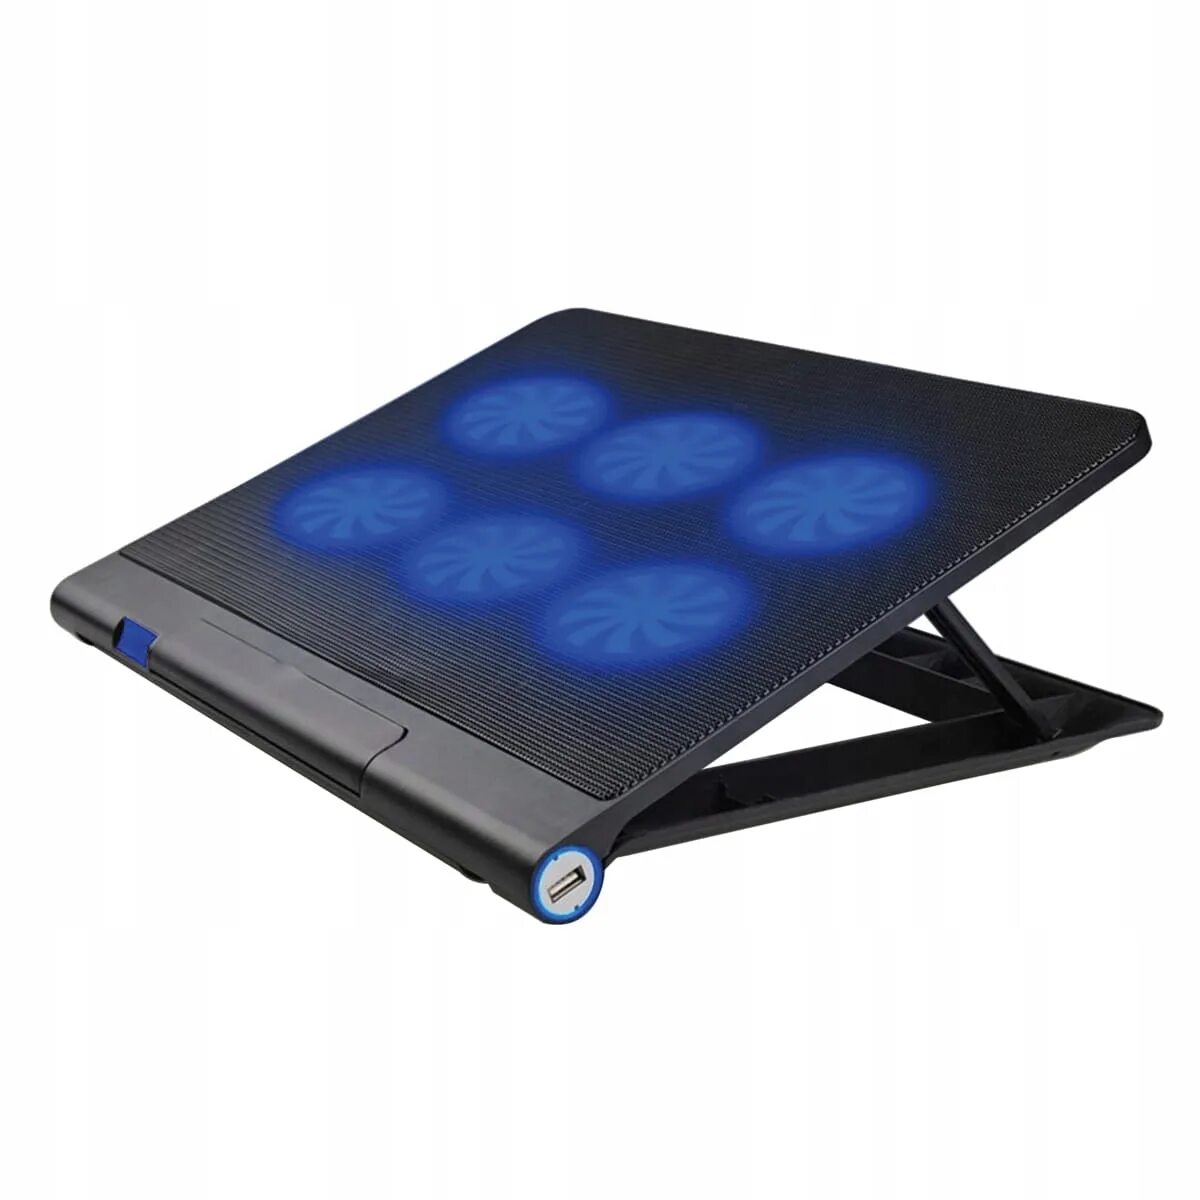 Охлаждающая подставка для ноутбука 17.3 Thermaltake. Cooler Pad 2 USB подставка для ноутбука. Laptop Cooling Pad i100. Охлаждающий подставка для ноутбука cp1705doublewind. Подставка кулер для ноутбука